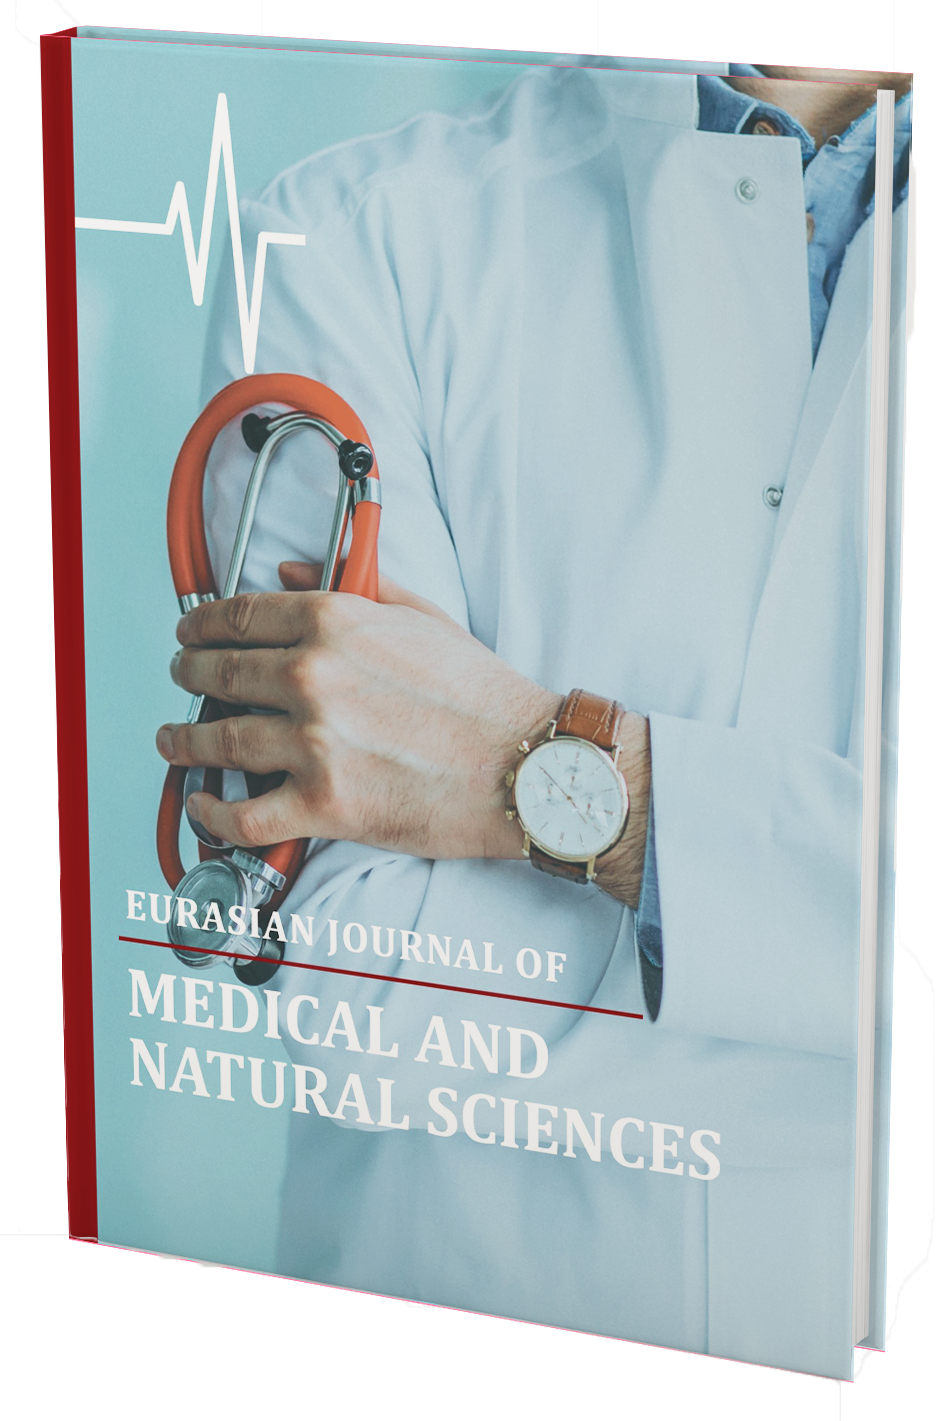 Medical and natural sciences